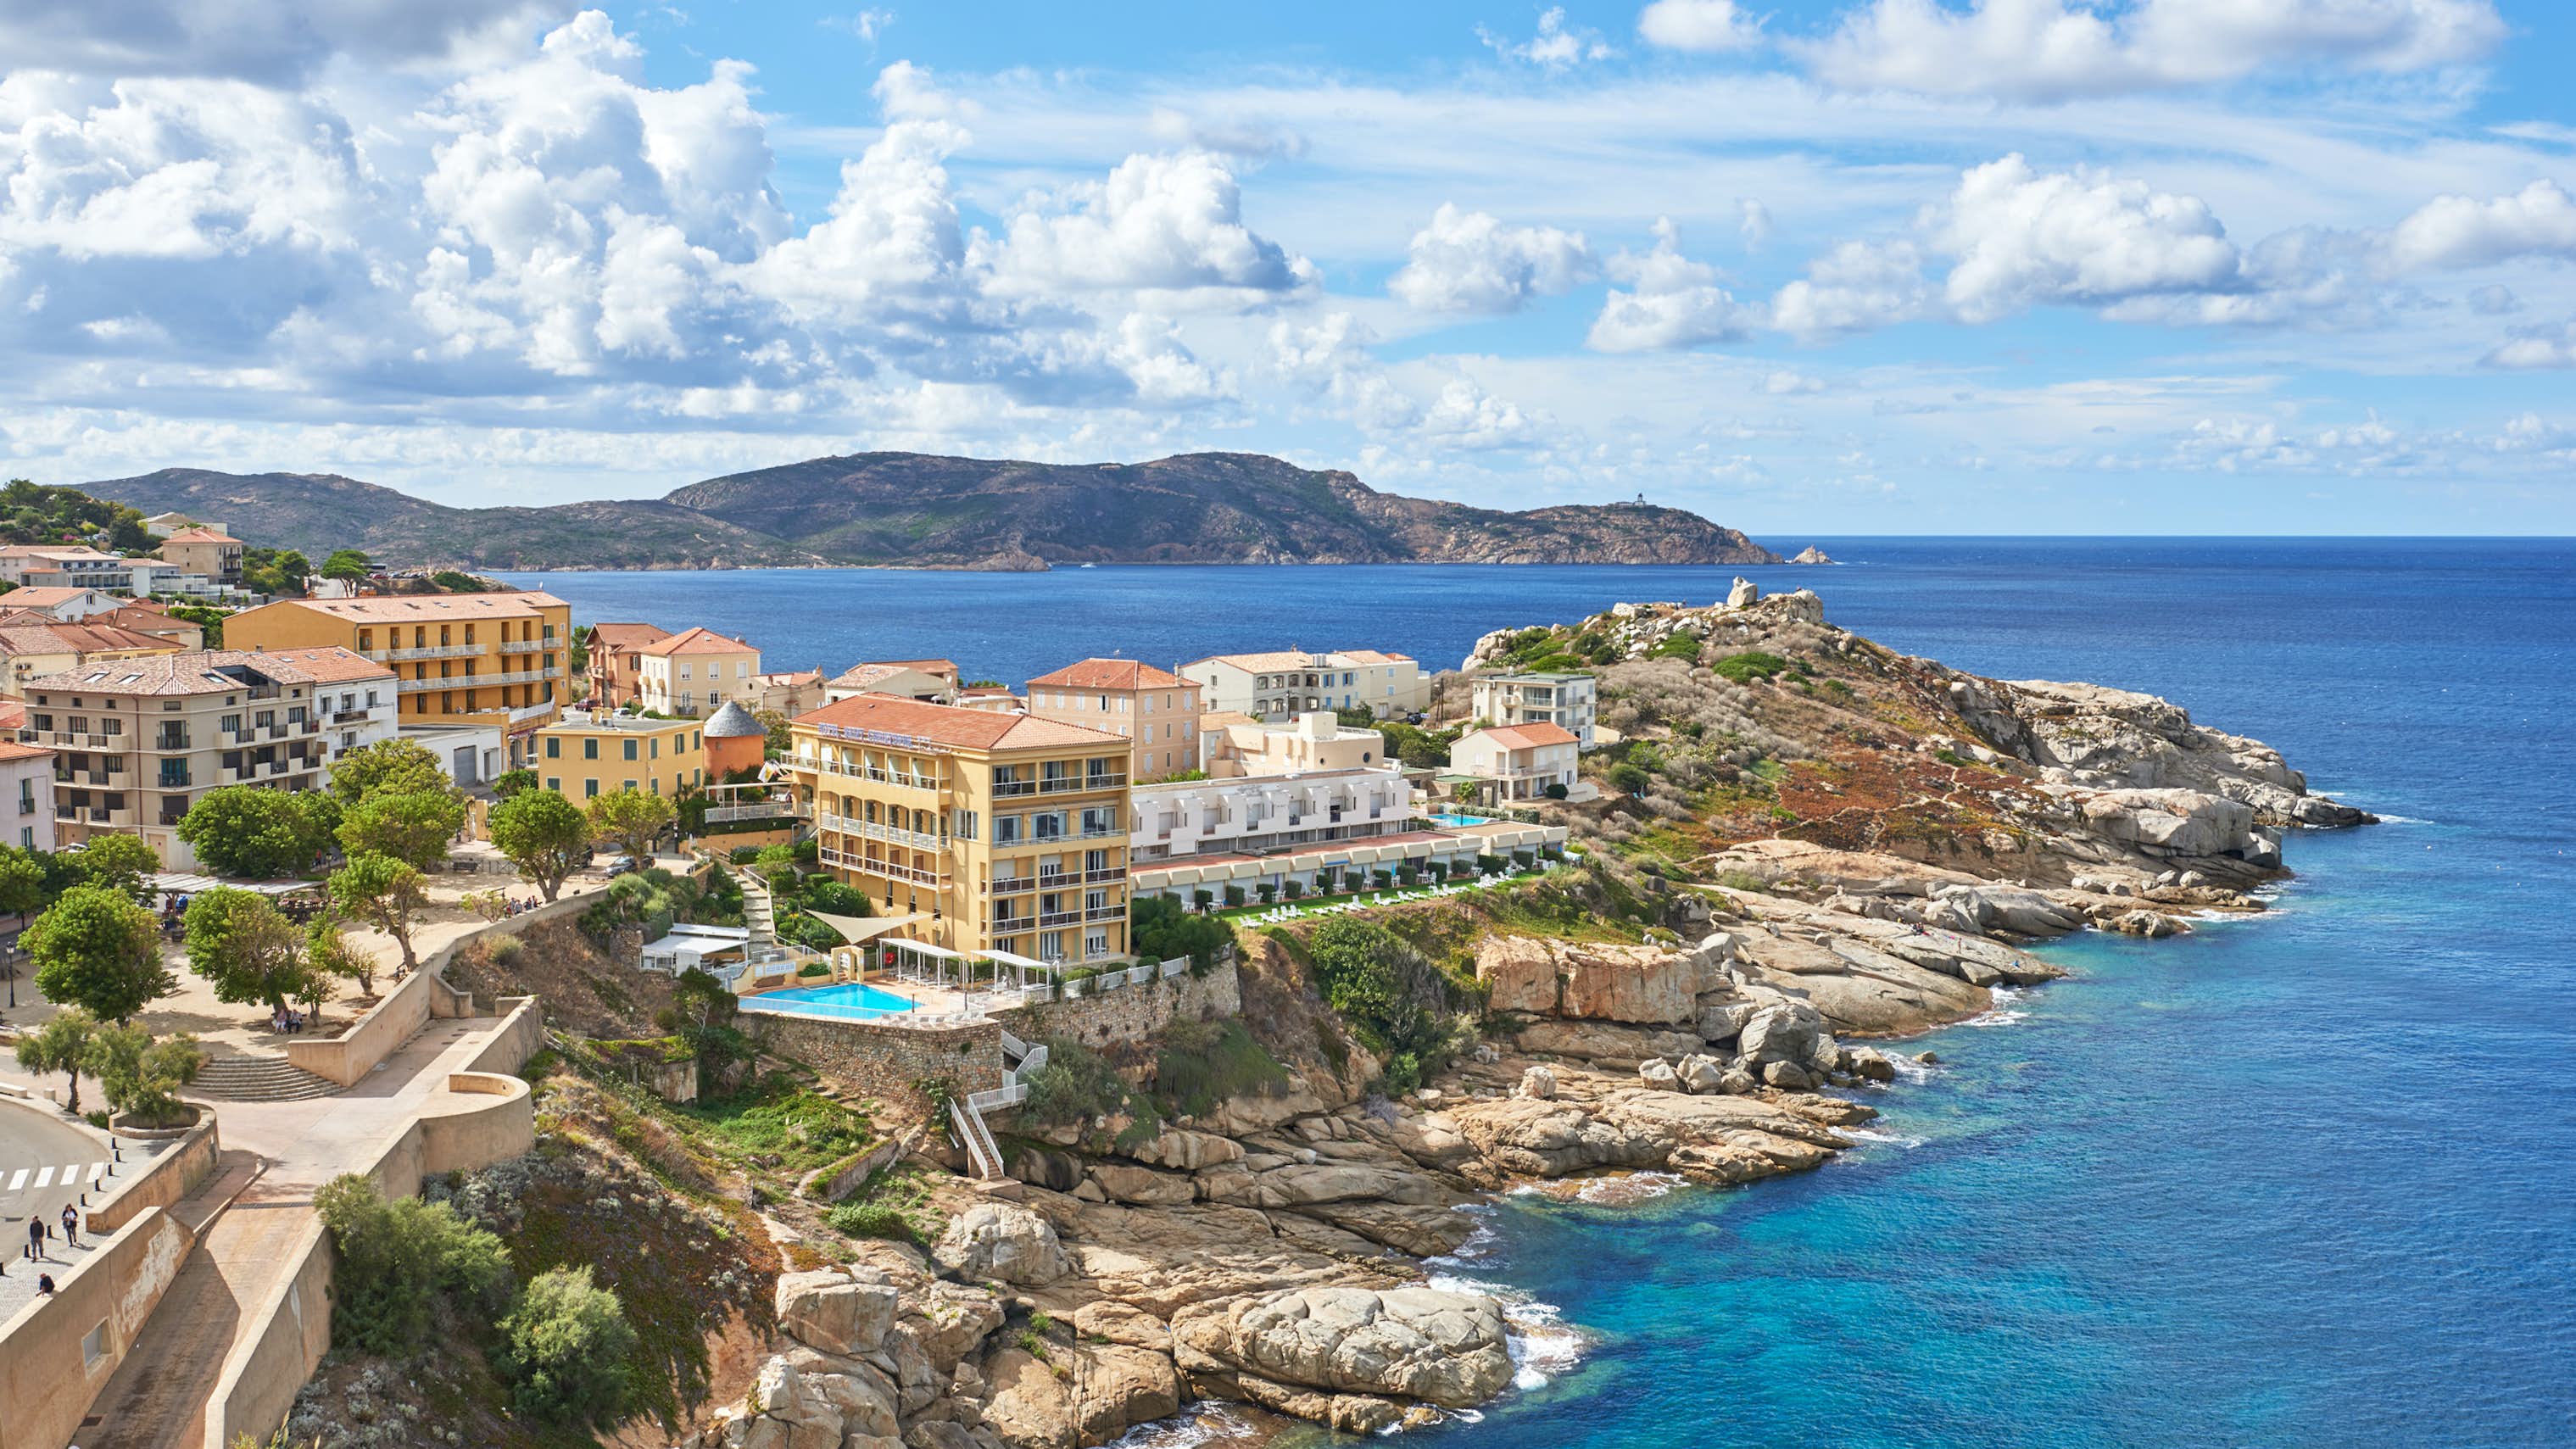 Corsica Yacht Charter Mediterranean - Beautiful buildings along the rocky coastline of Calvi, Corsica, France